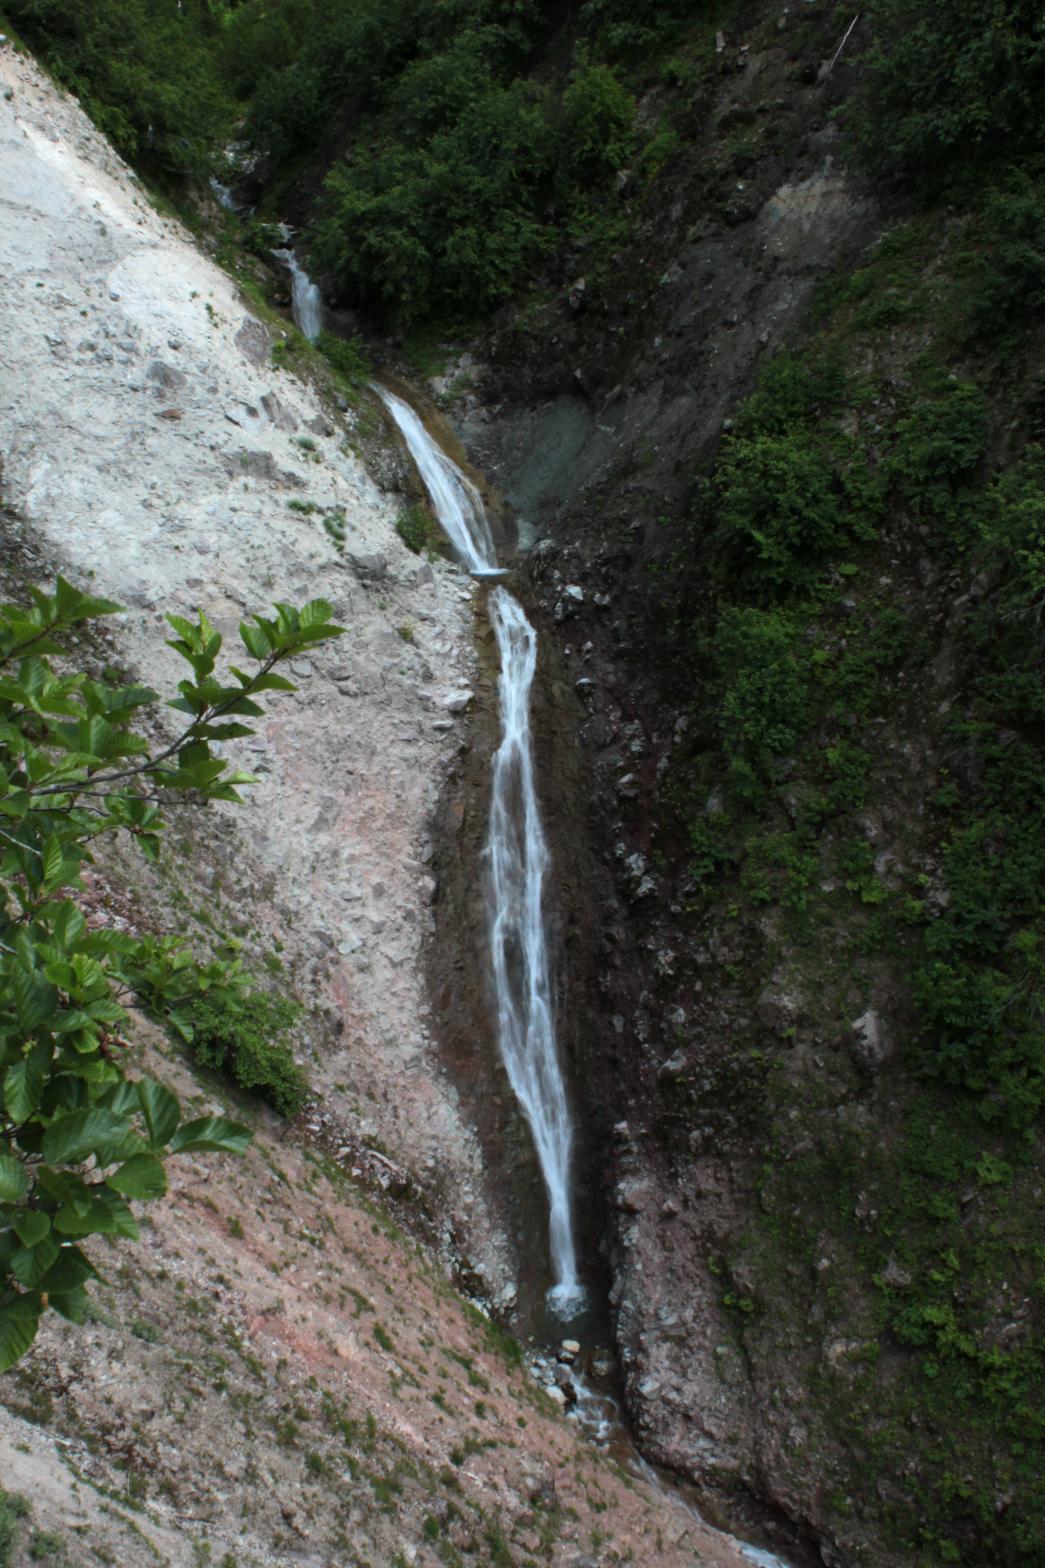 Close up view of Lower Tatasum Falls